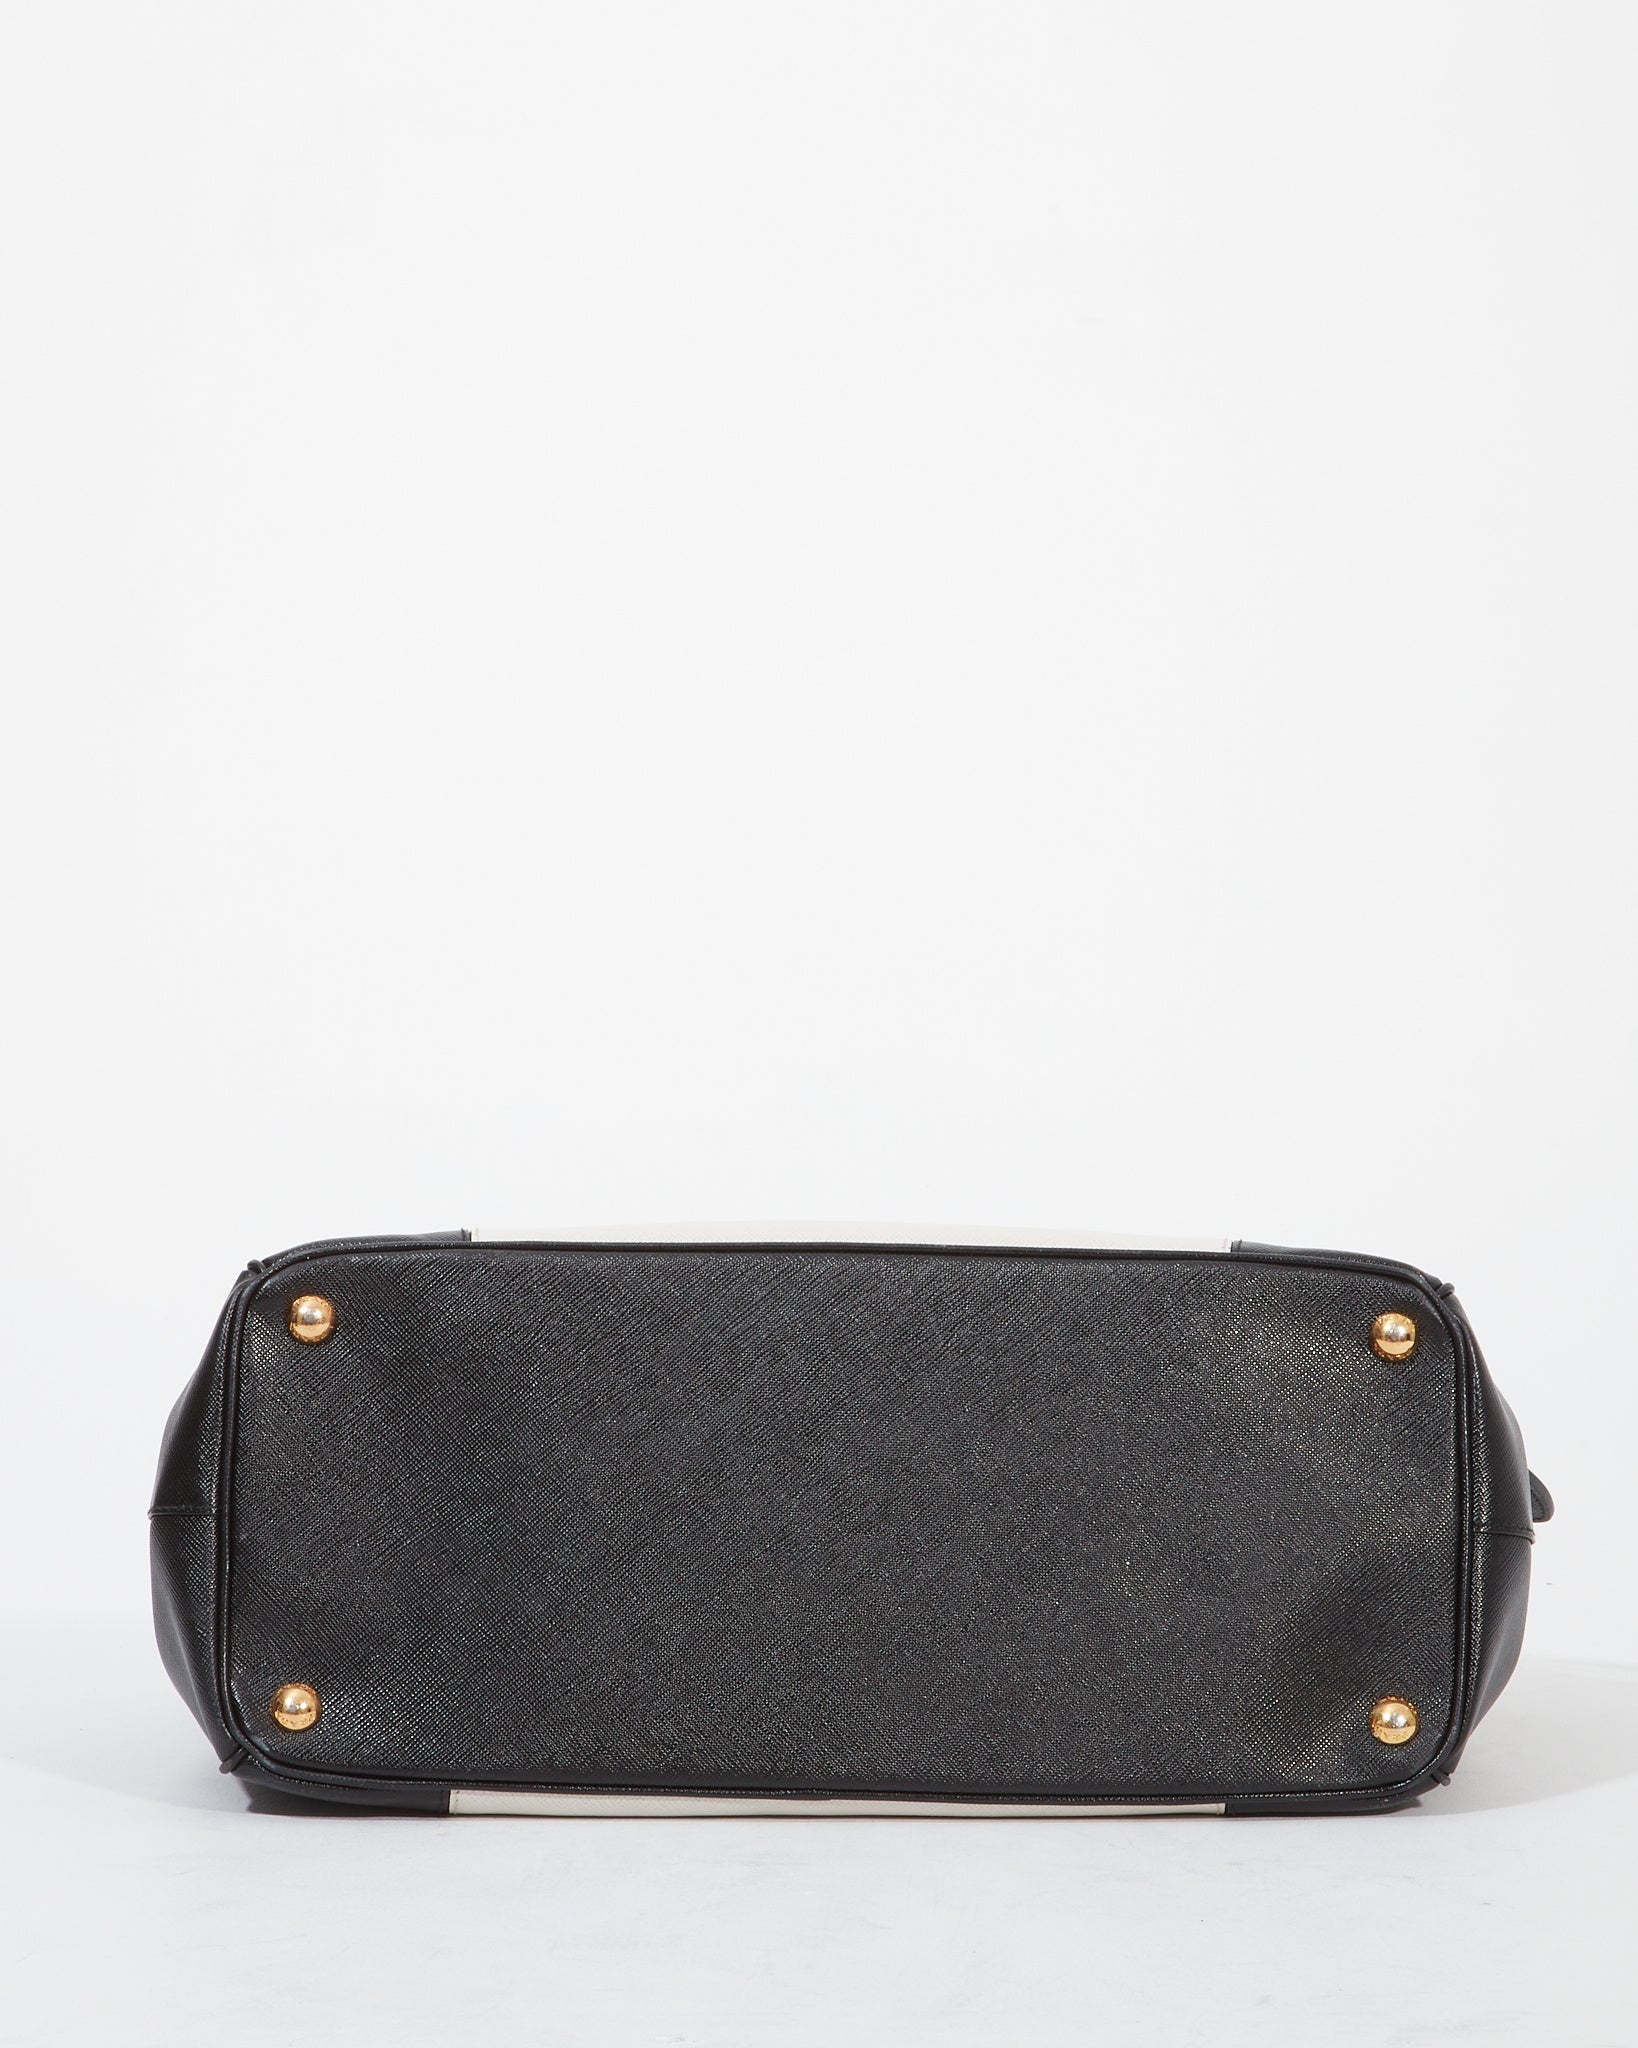 Prada Black/White Saffiano Leather Double Zip Galleria Tote Medium Bag